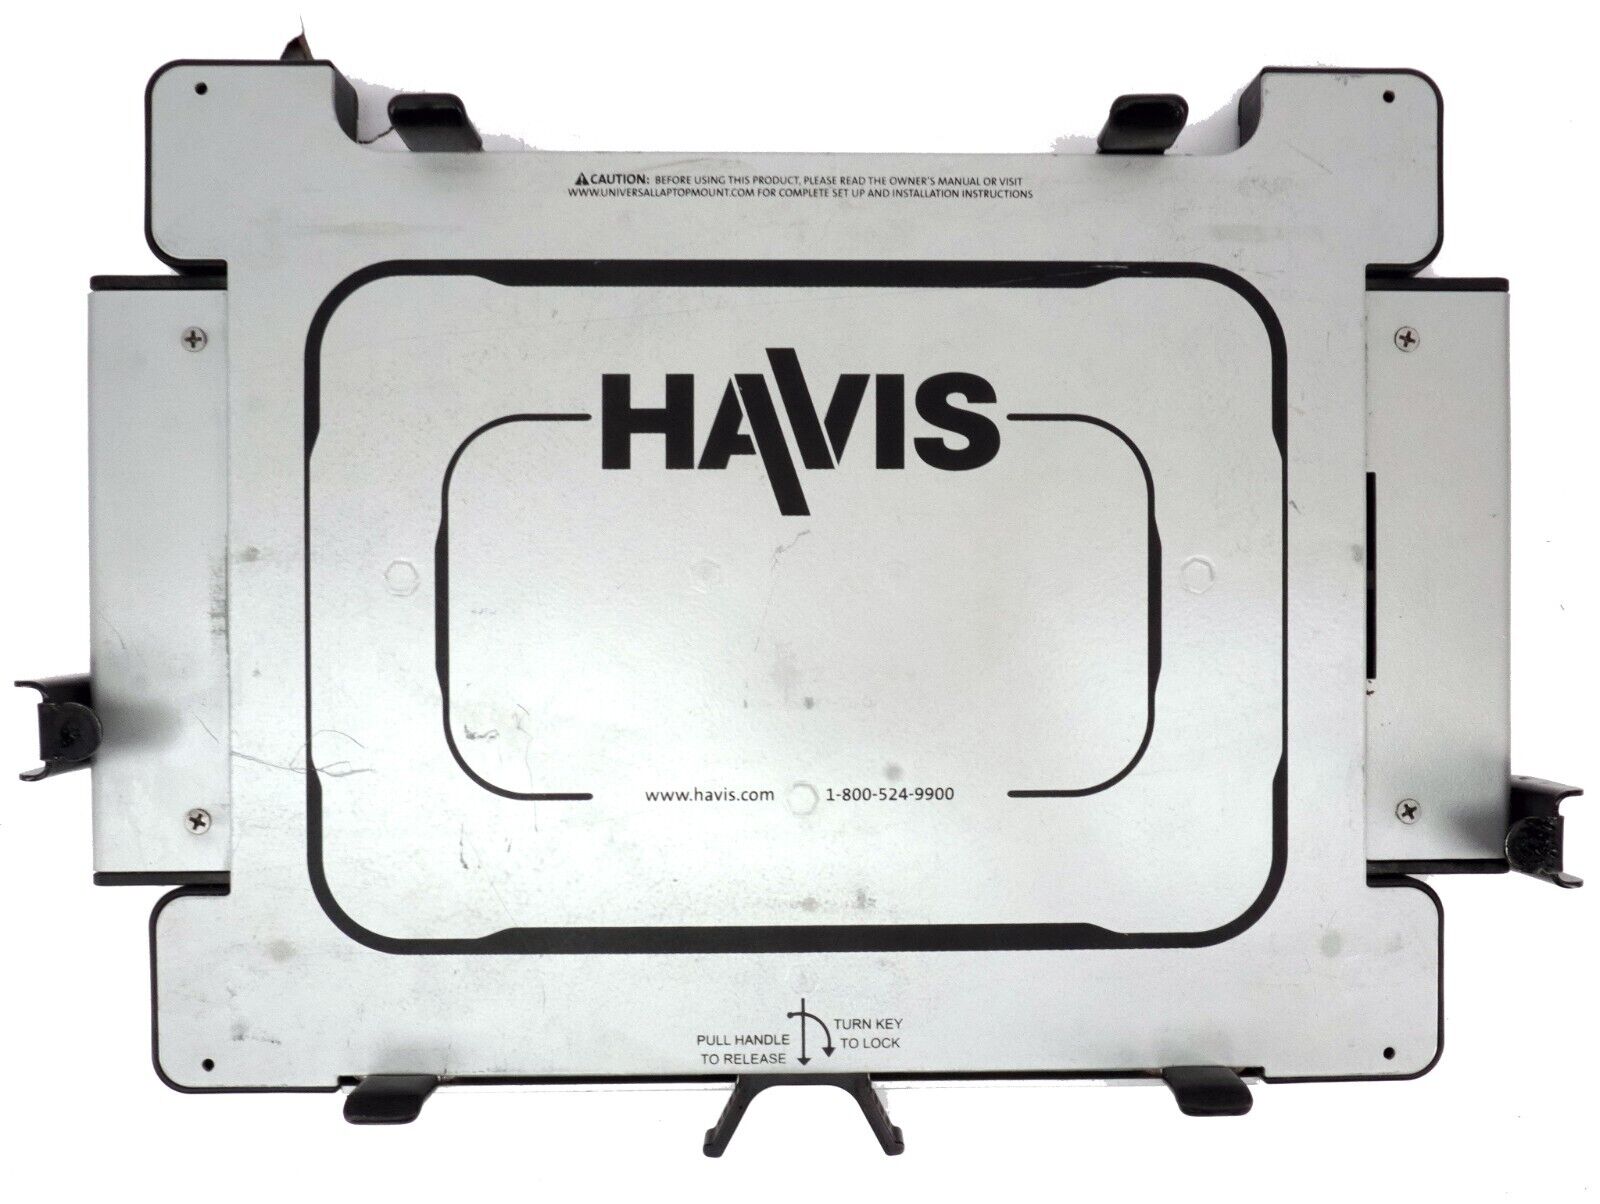 Havis UT-101 Universal Laptop Mount Docking Station Car/Truck